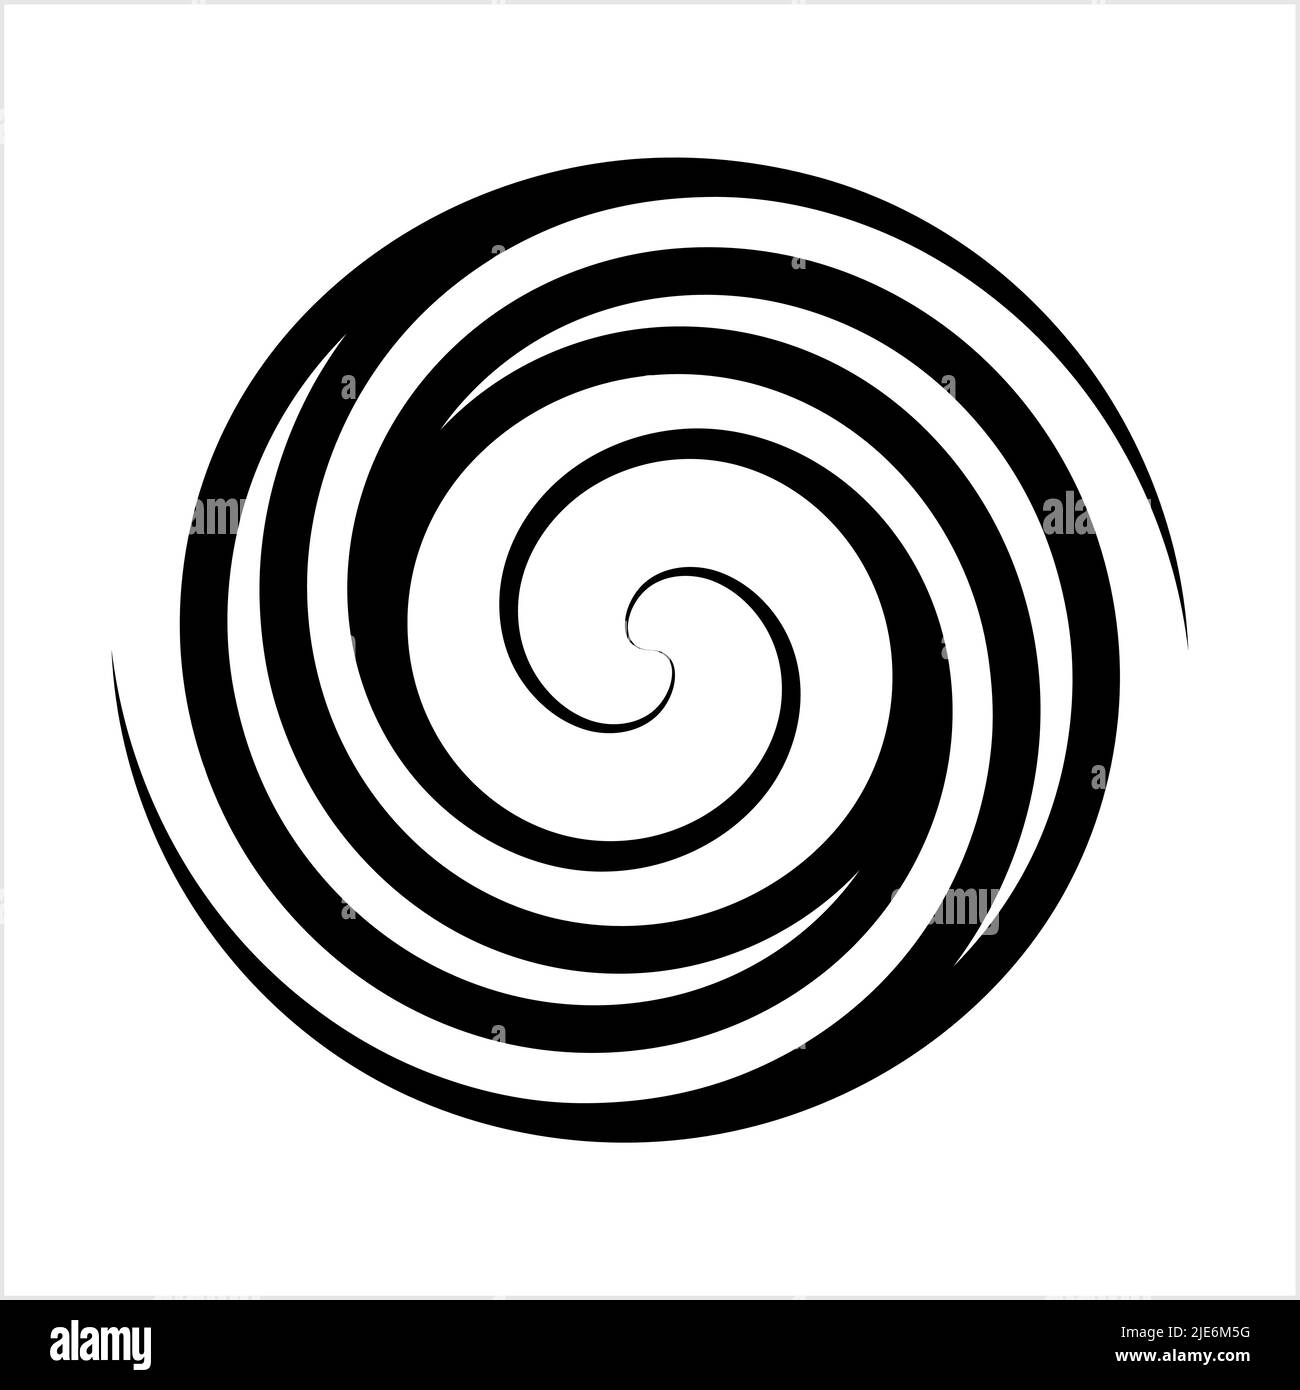 Spiral art Vectors & Illustrations for Free Download